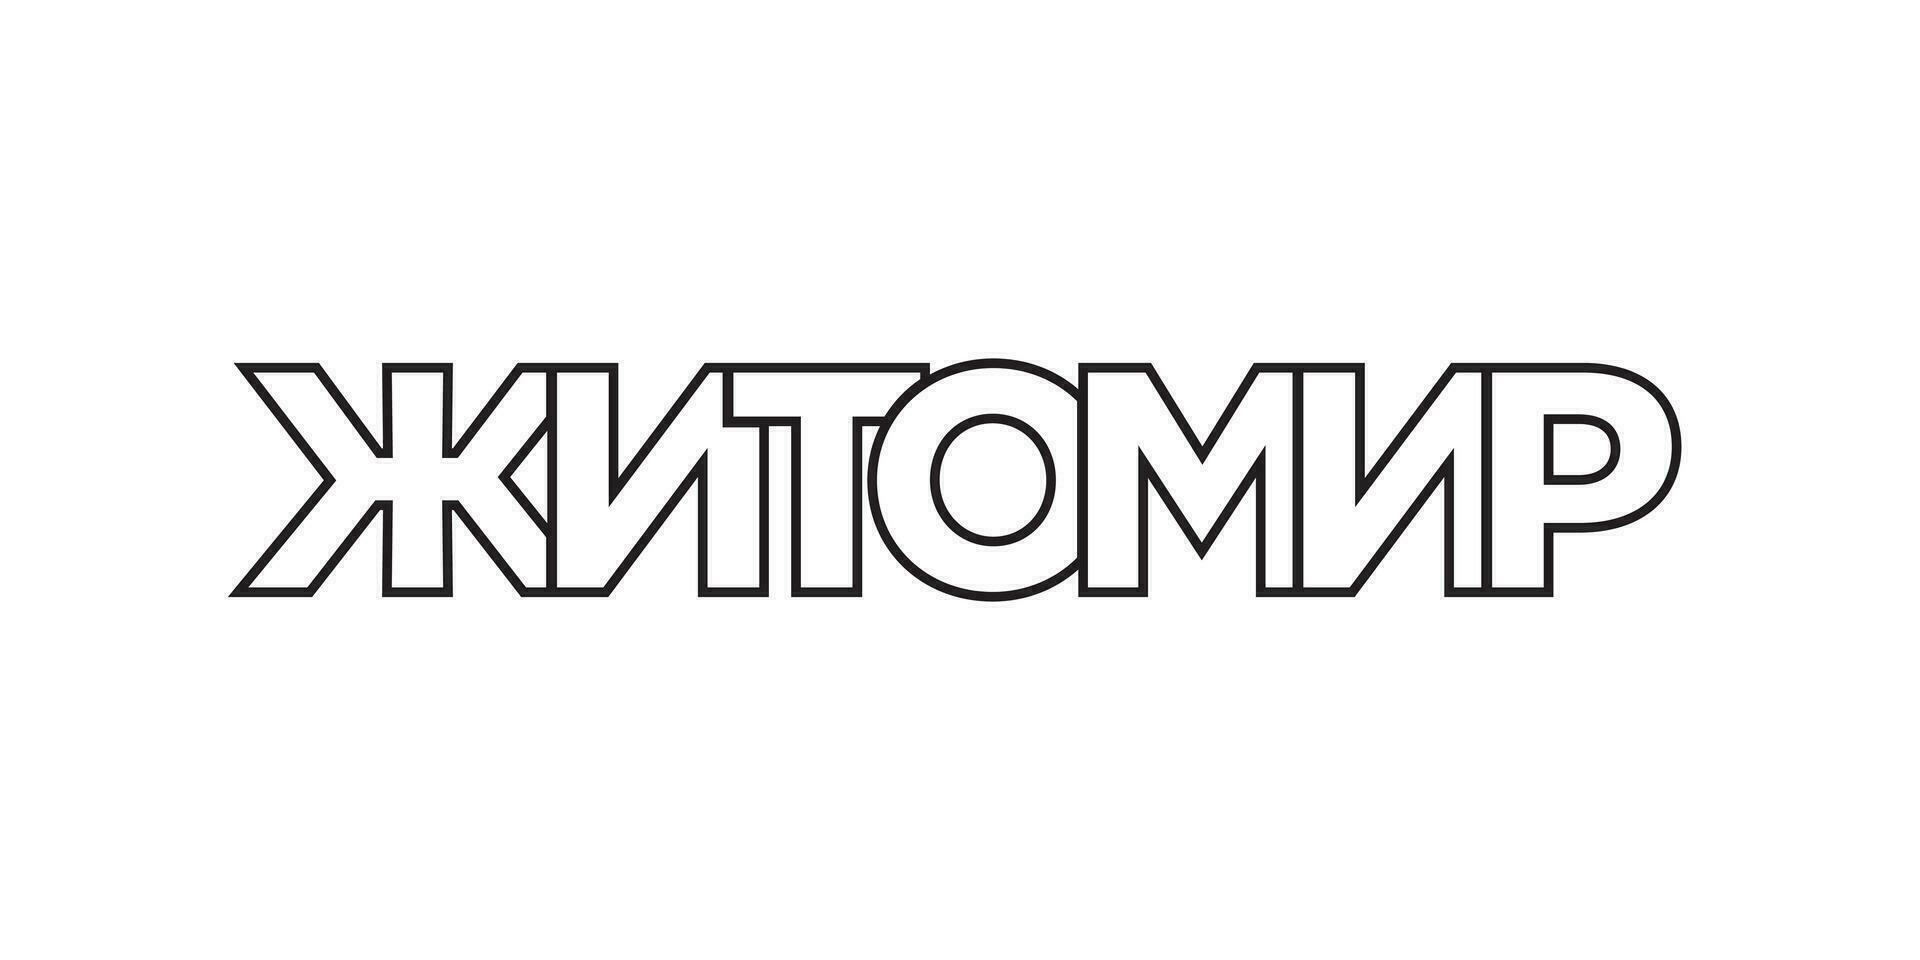 zhytomyr i de ukraina emblem. de design funktioner en geometrisk stil, vektor illustration med djärv typografi i en modern font. de grafisk slogan text.